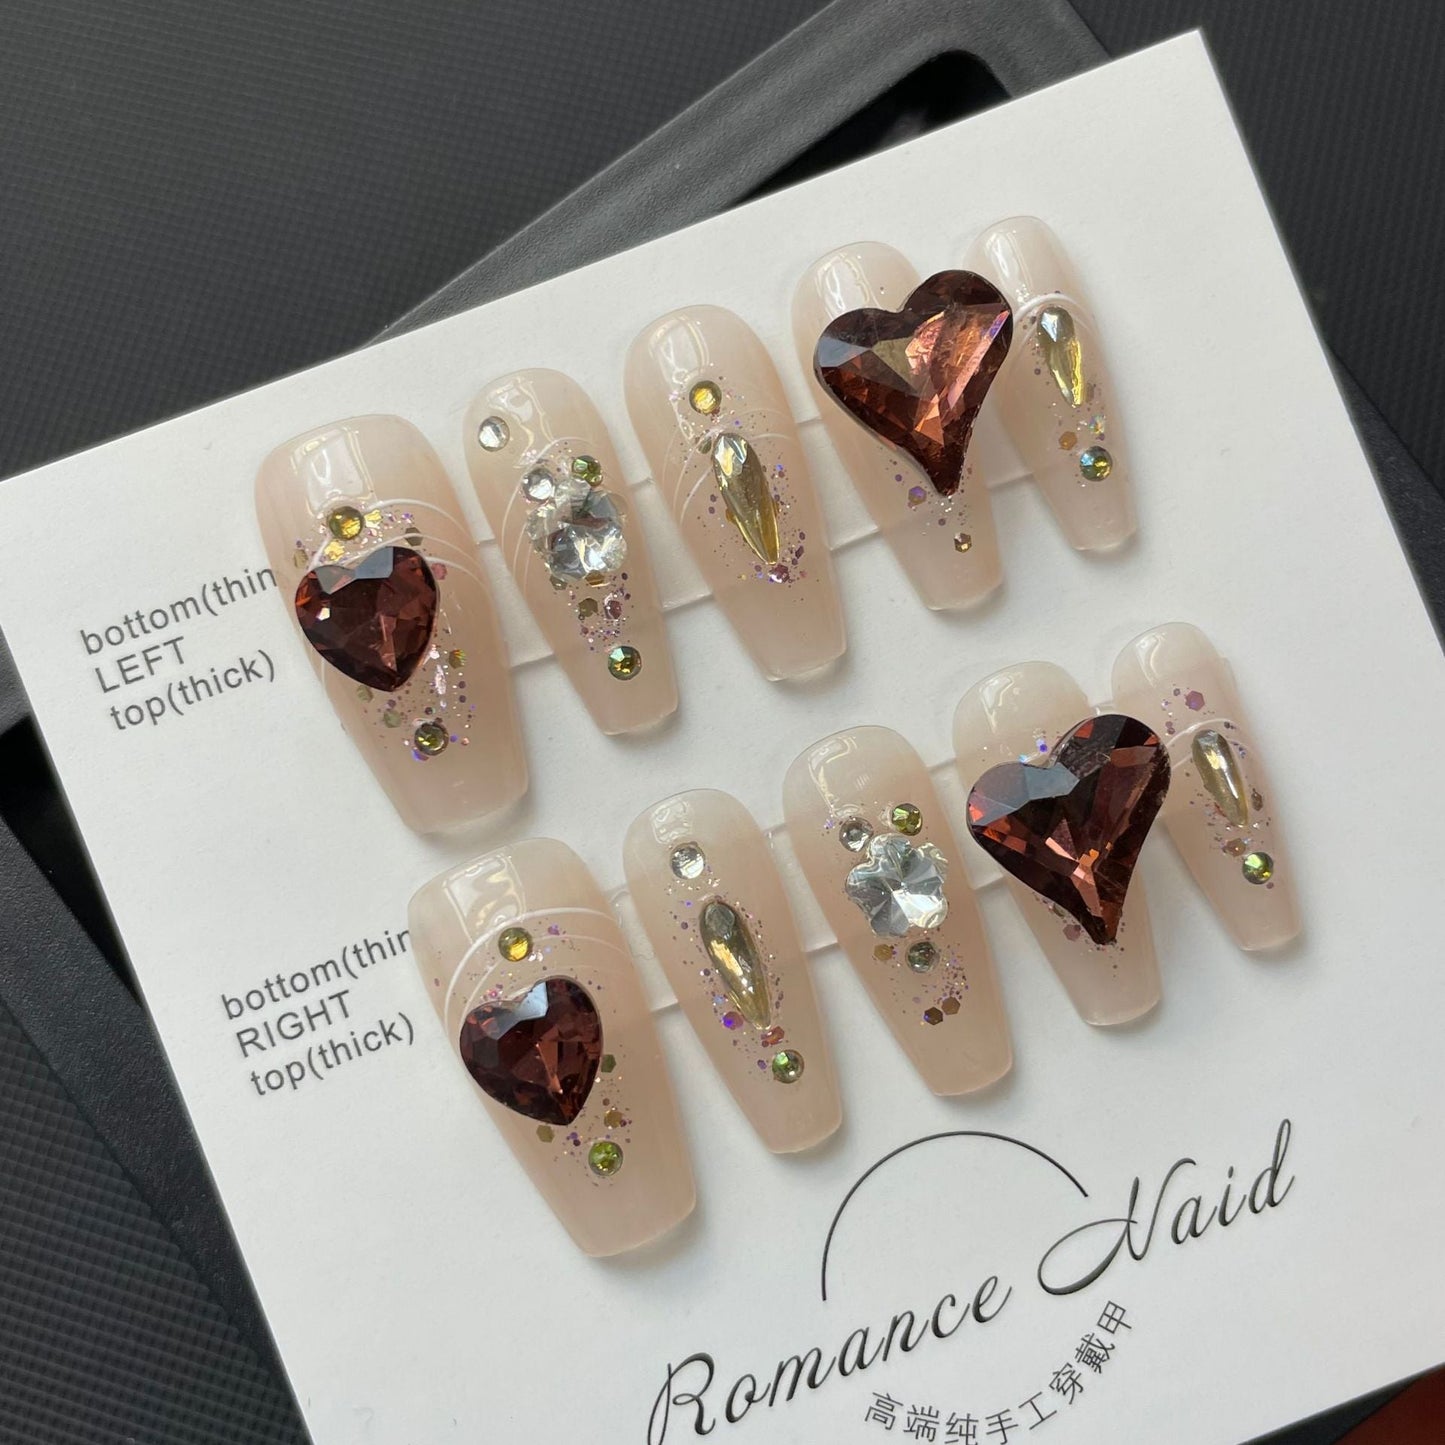 622 Rhinestone press on nails 100% handmade false nails nude color